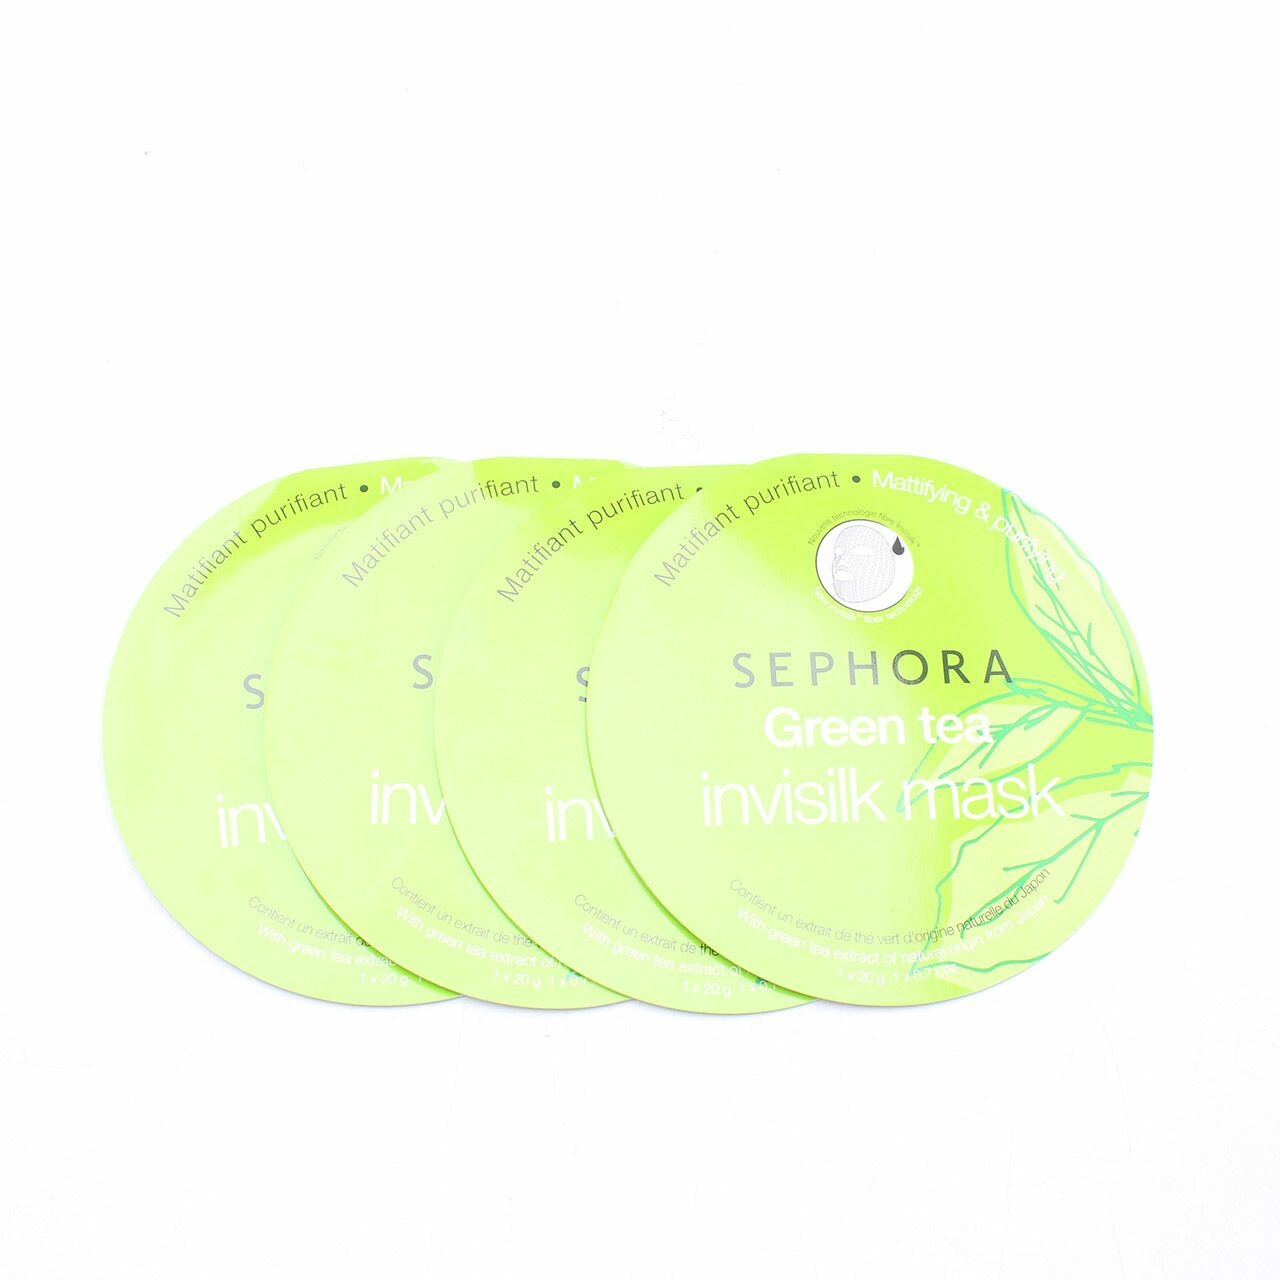 Sephora Green Tea Invisilk Mask Bundle Skin Care